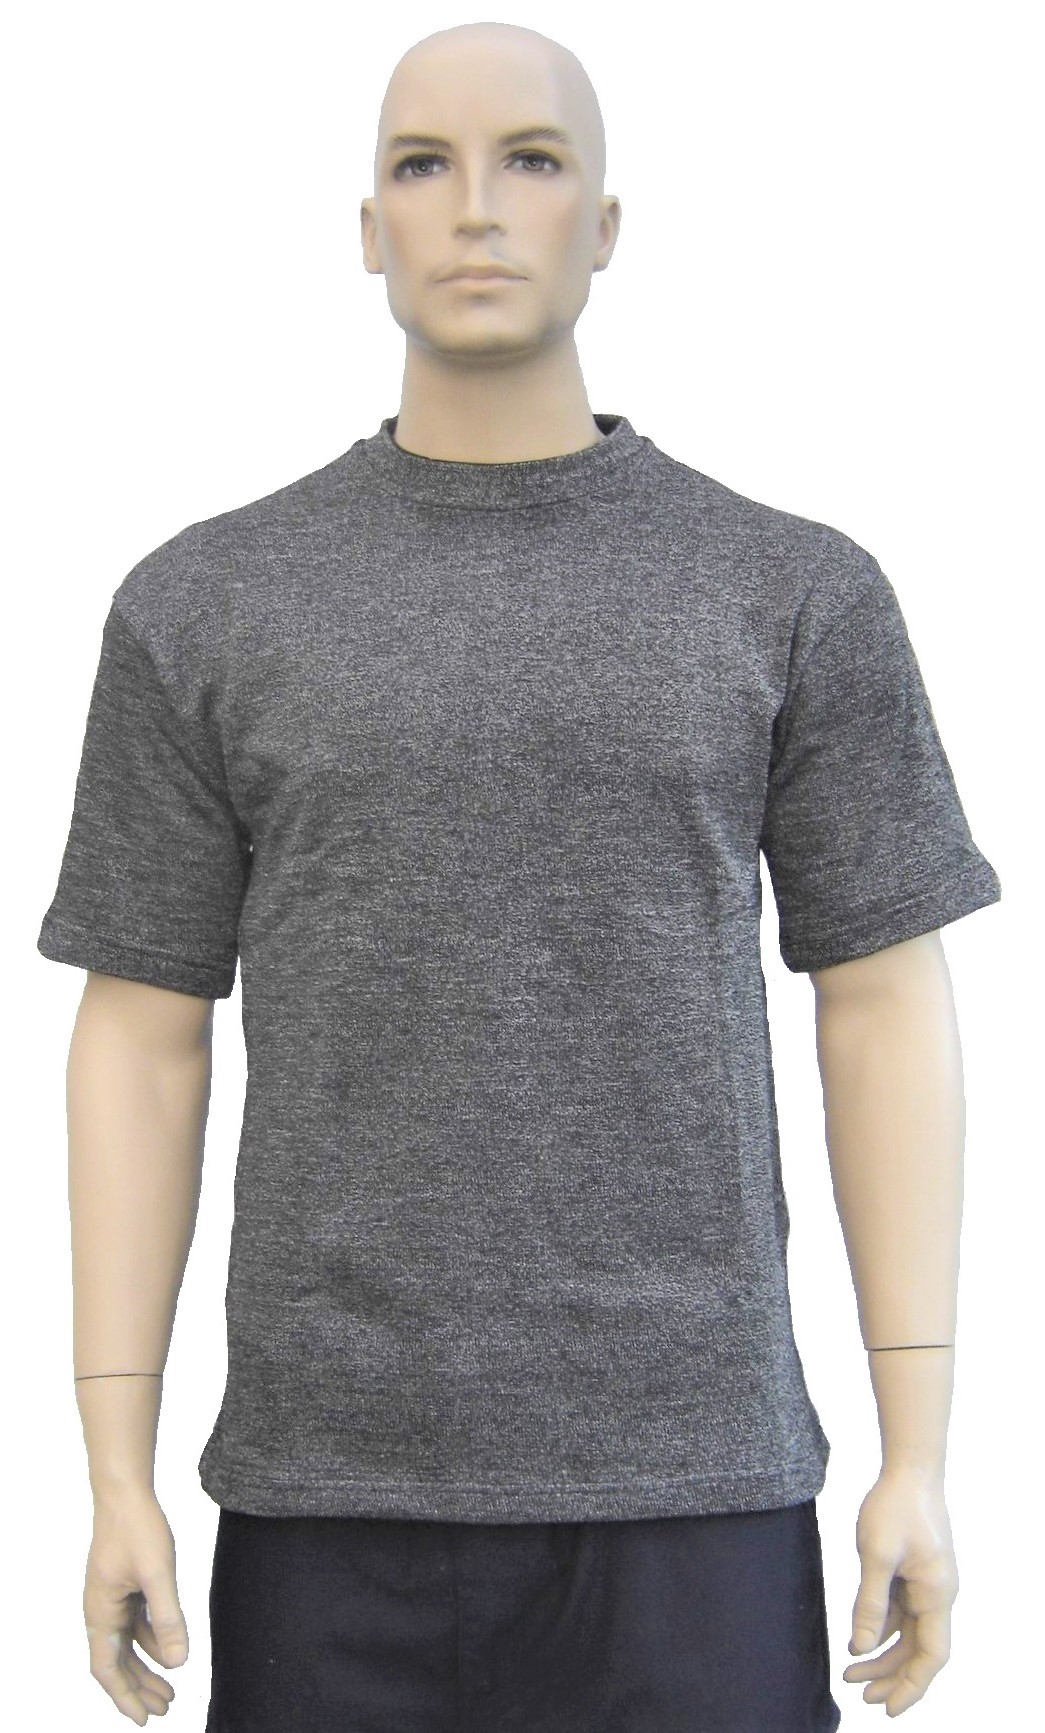 Grau Schnittschutz T-Shirt - Unterhemd